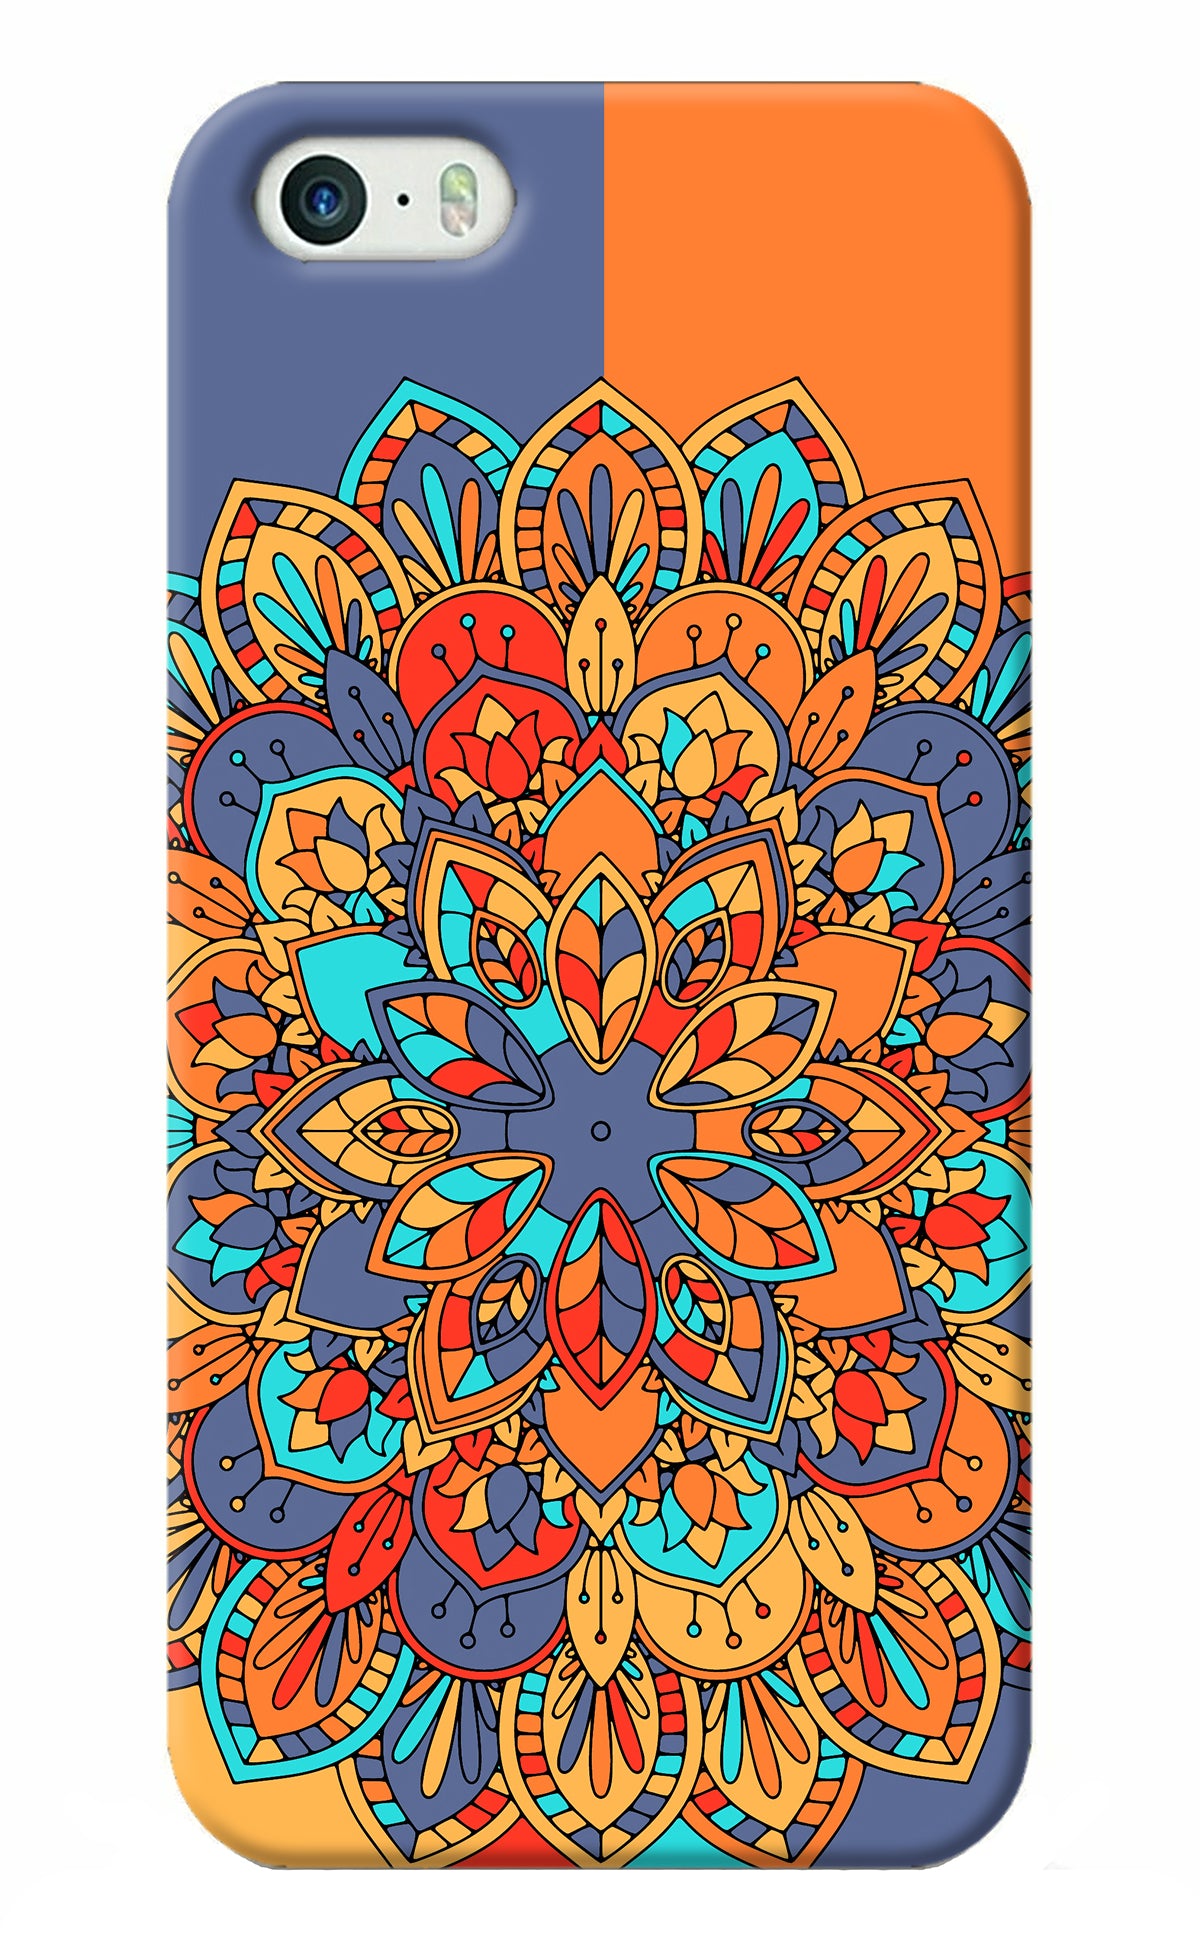 Color Mandala iPhone 5/5s Back Cover